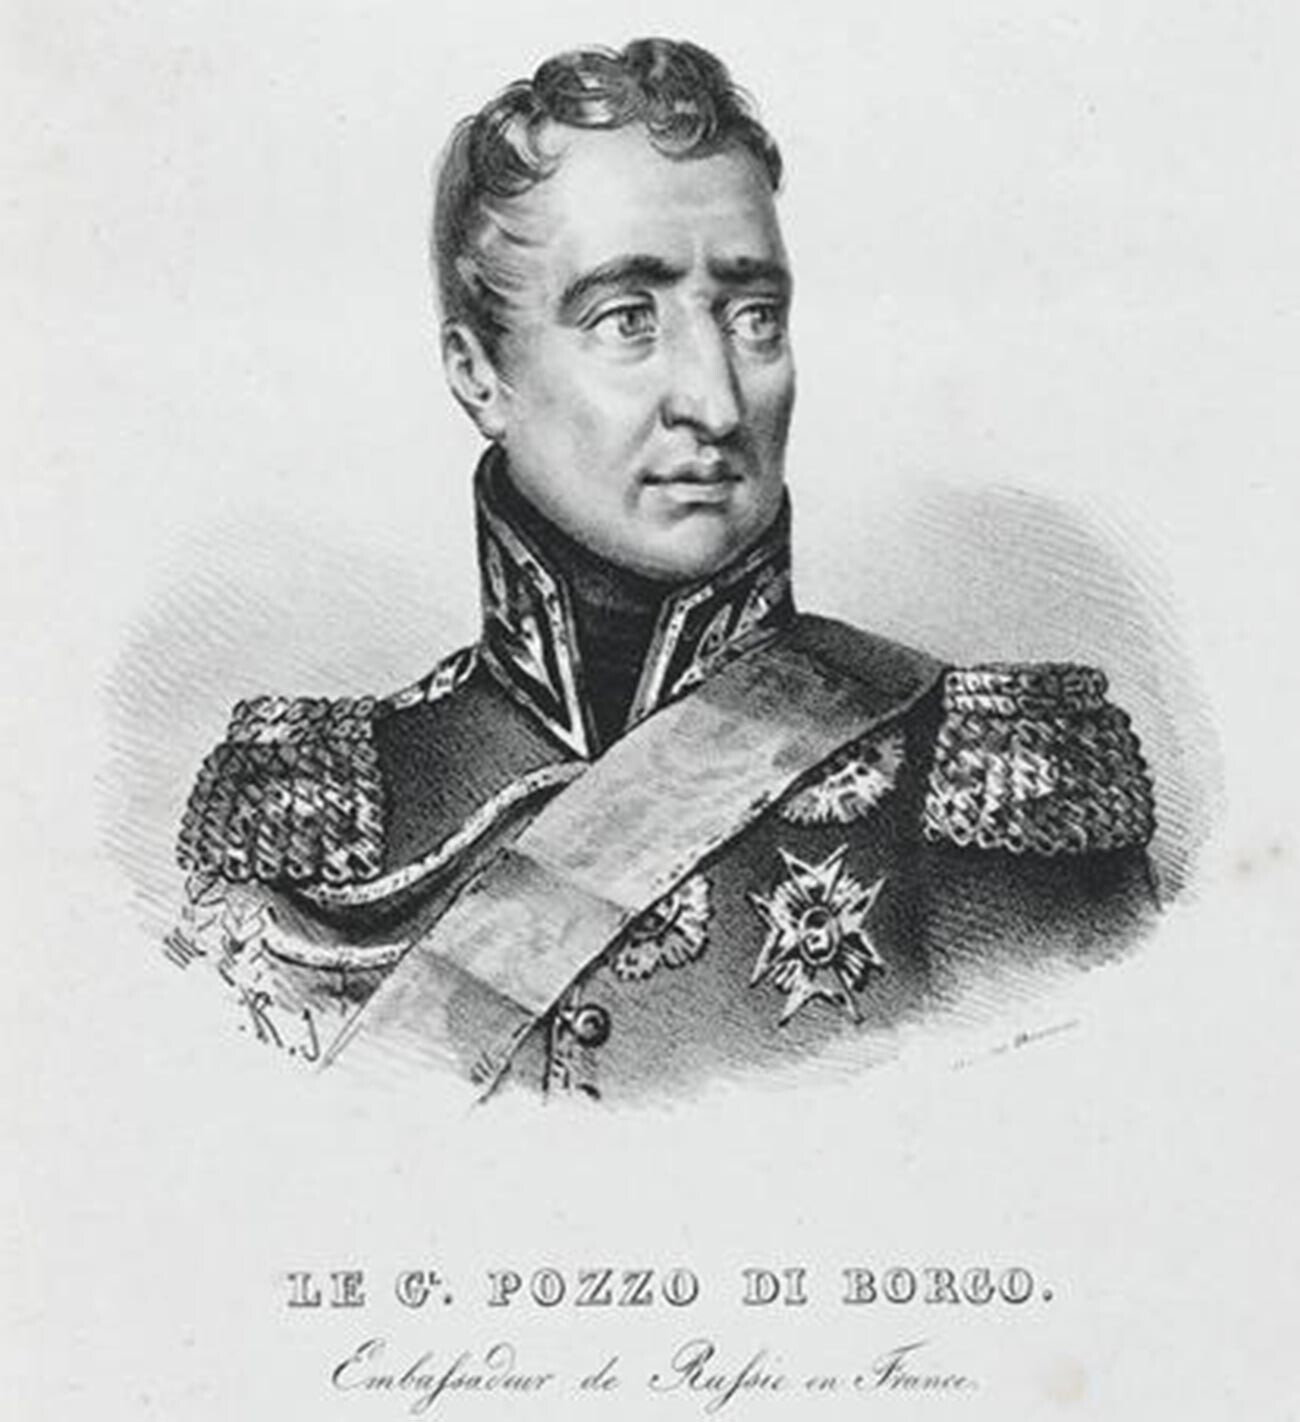 General Pozzo de Borgo  